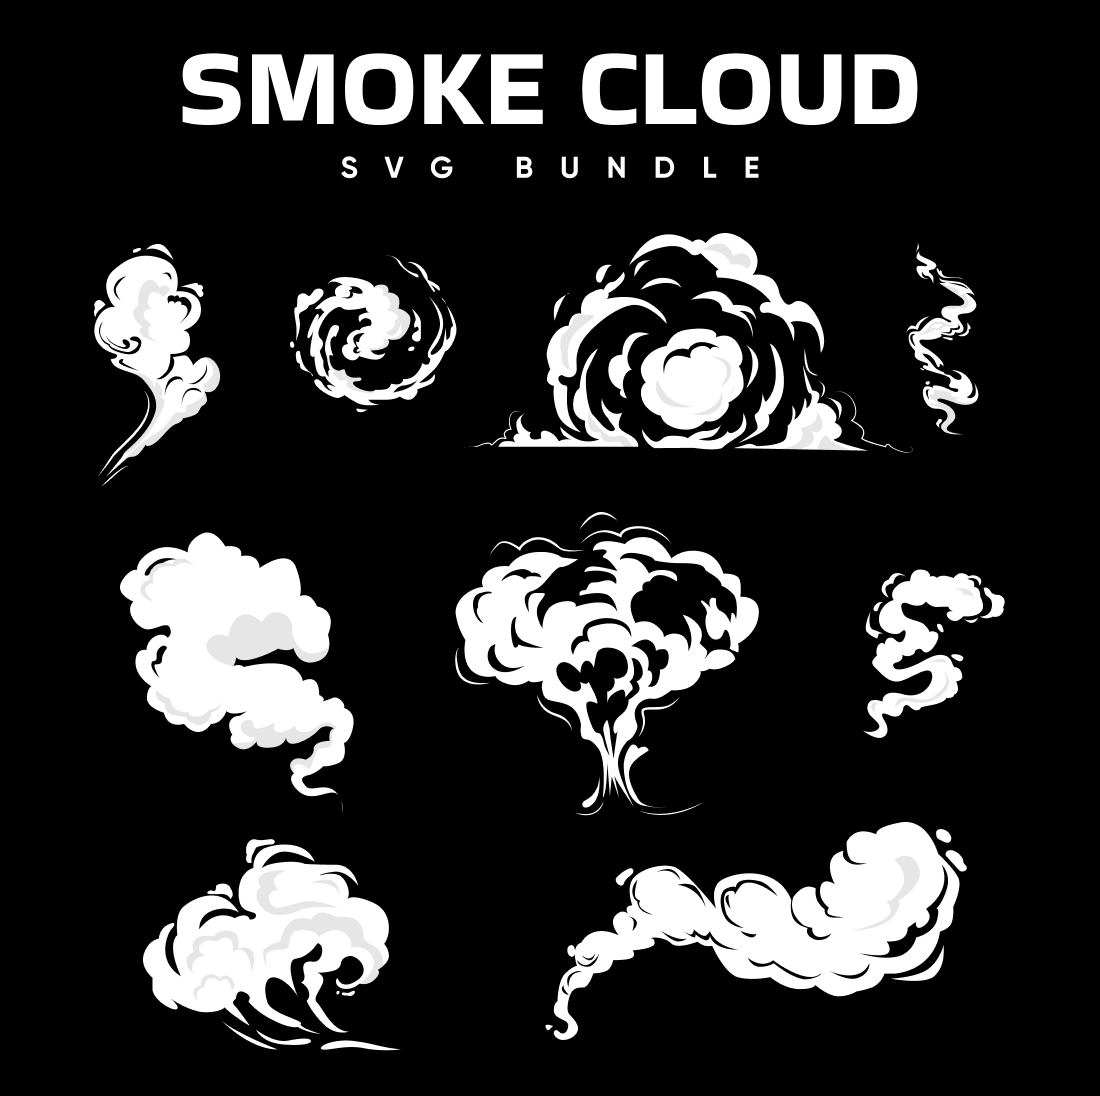 Smoke Cloud SVG.